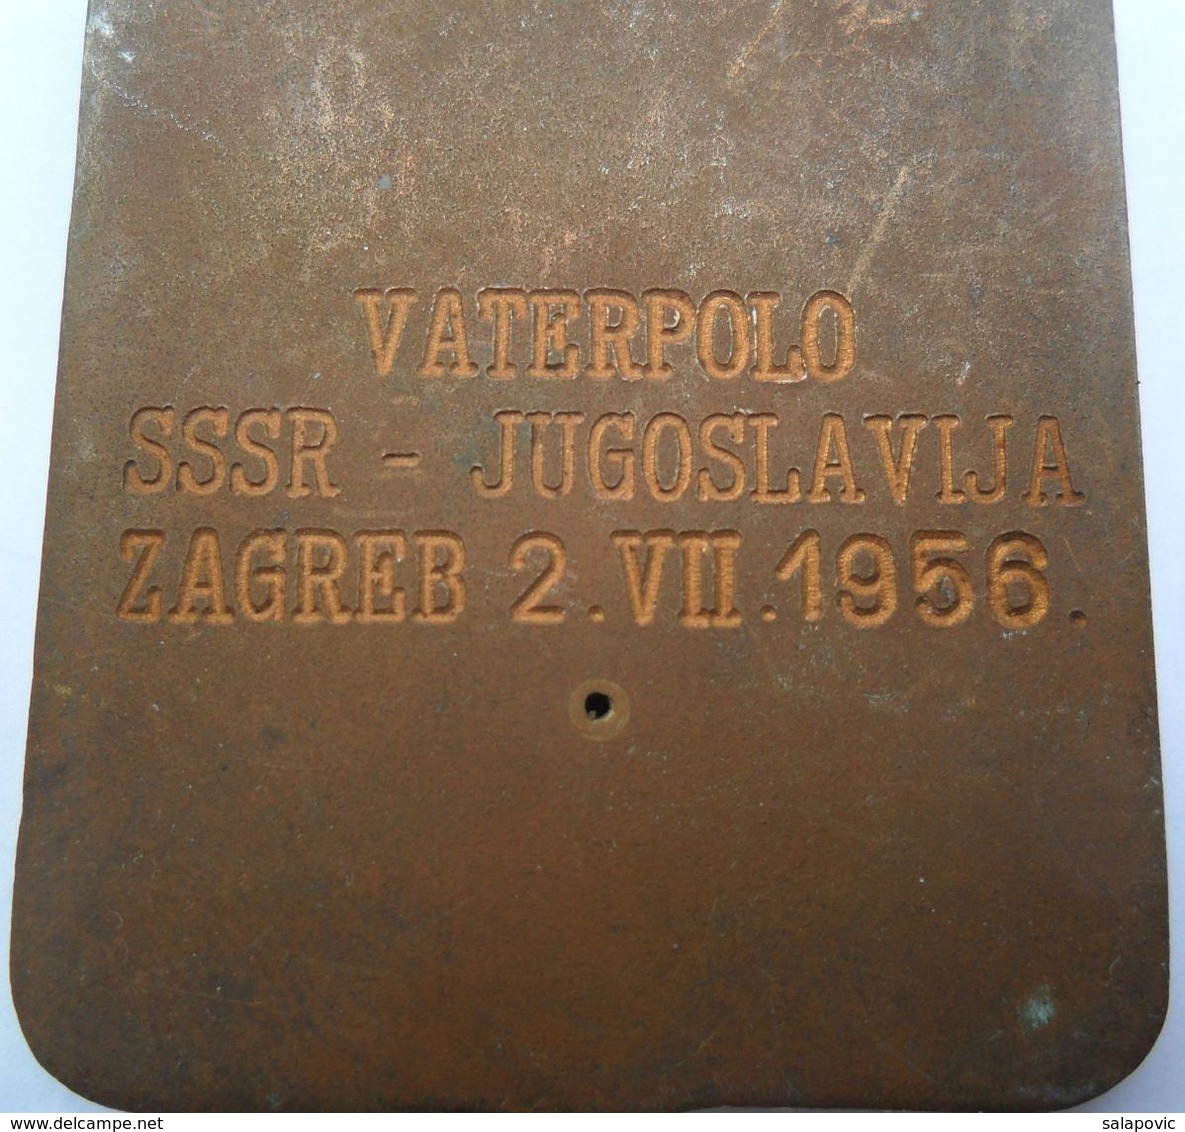 WATER POLO, VATERPOLO SSSR - JUGOSLAVIJA, ZAGREB 2.7.1956  PLAQUE PLIM - Natation